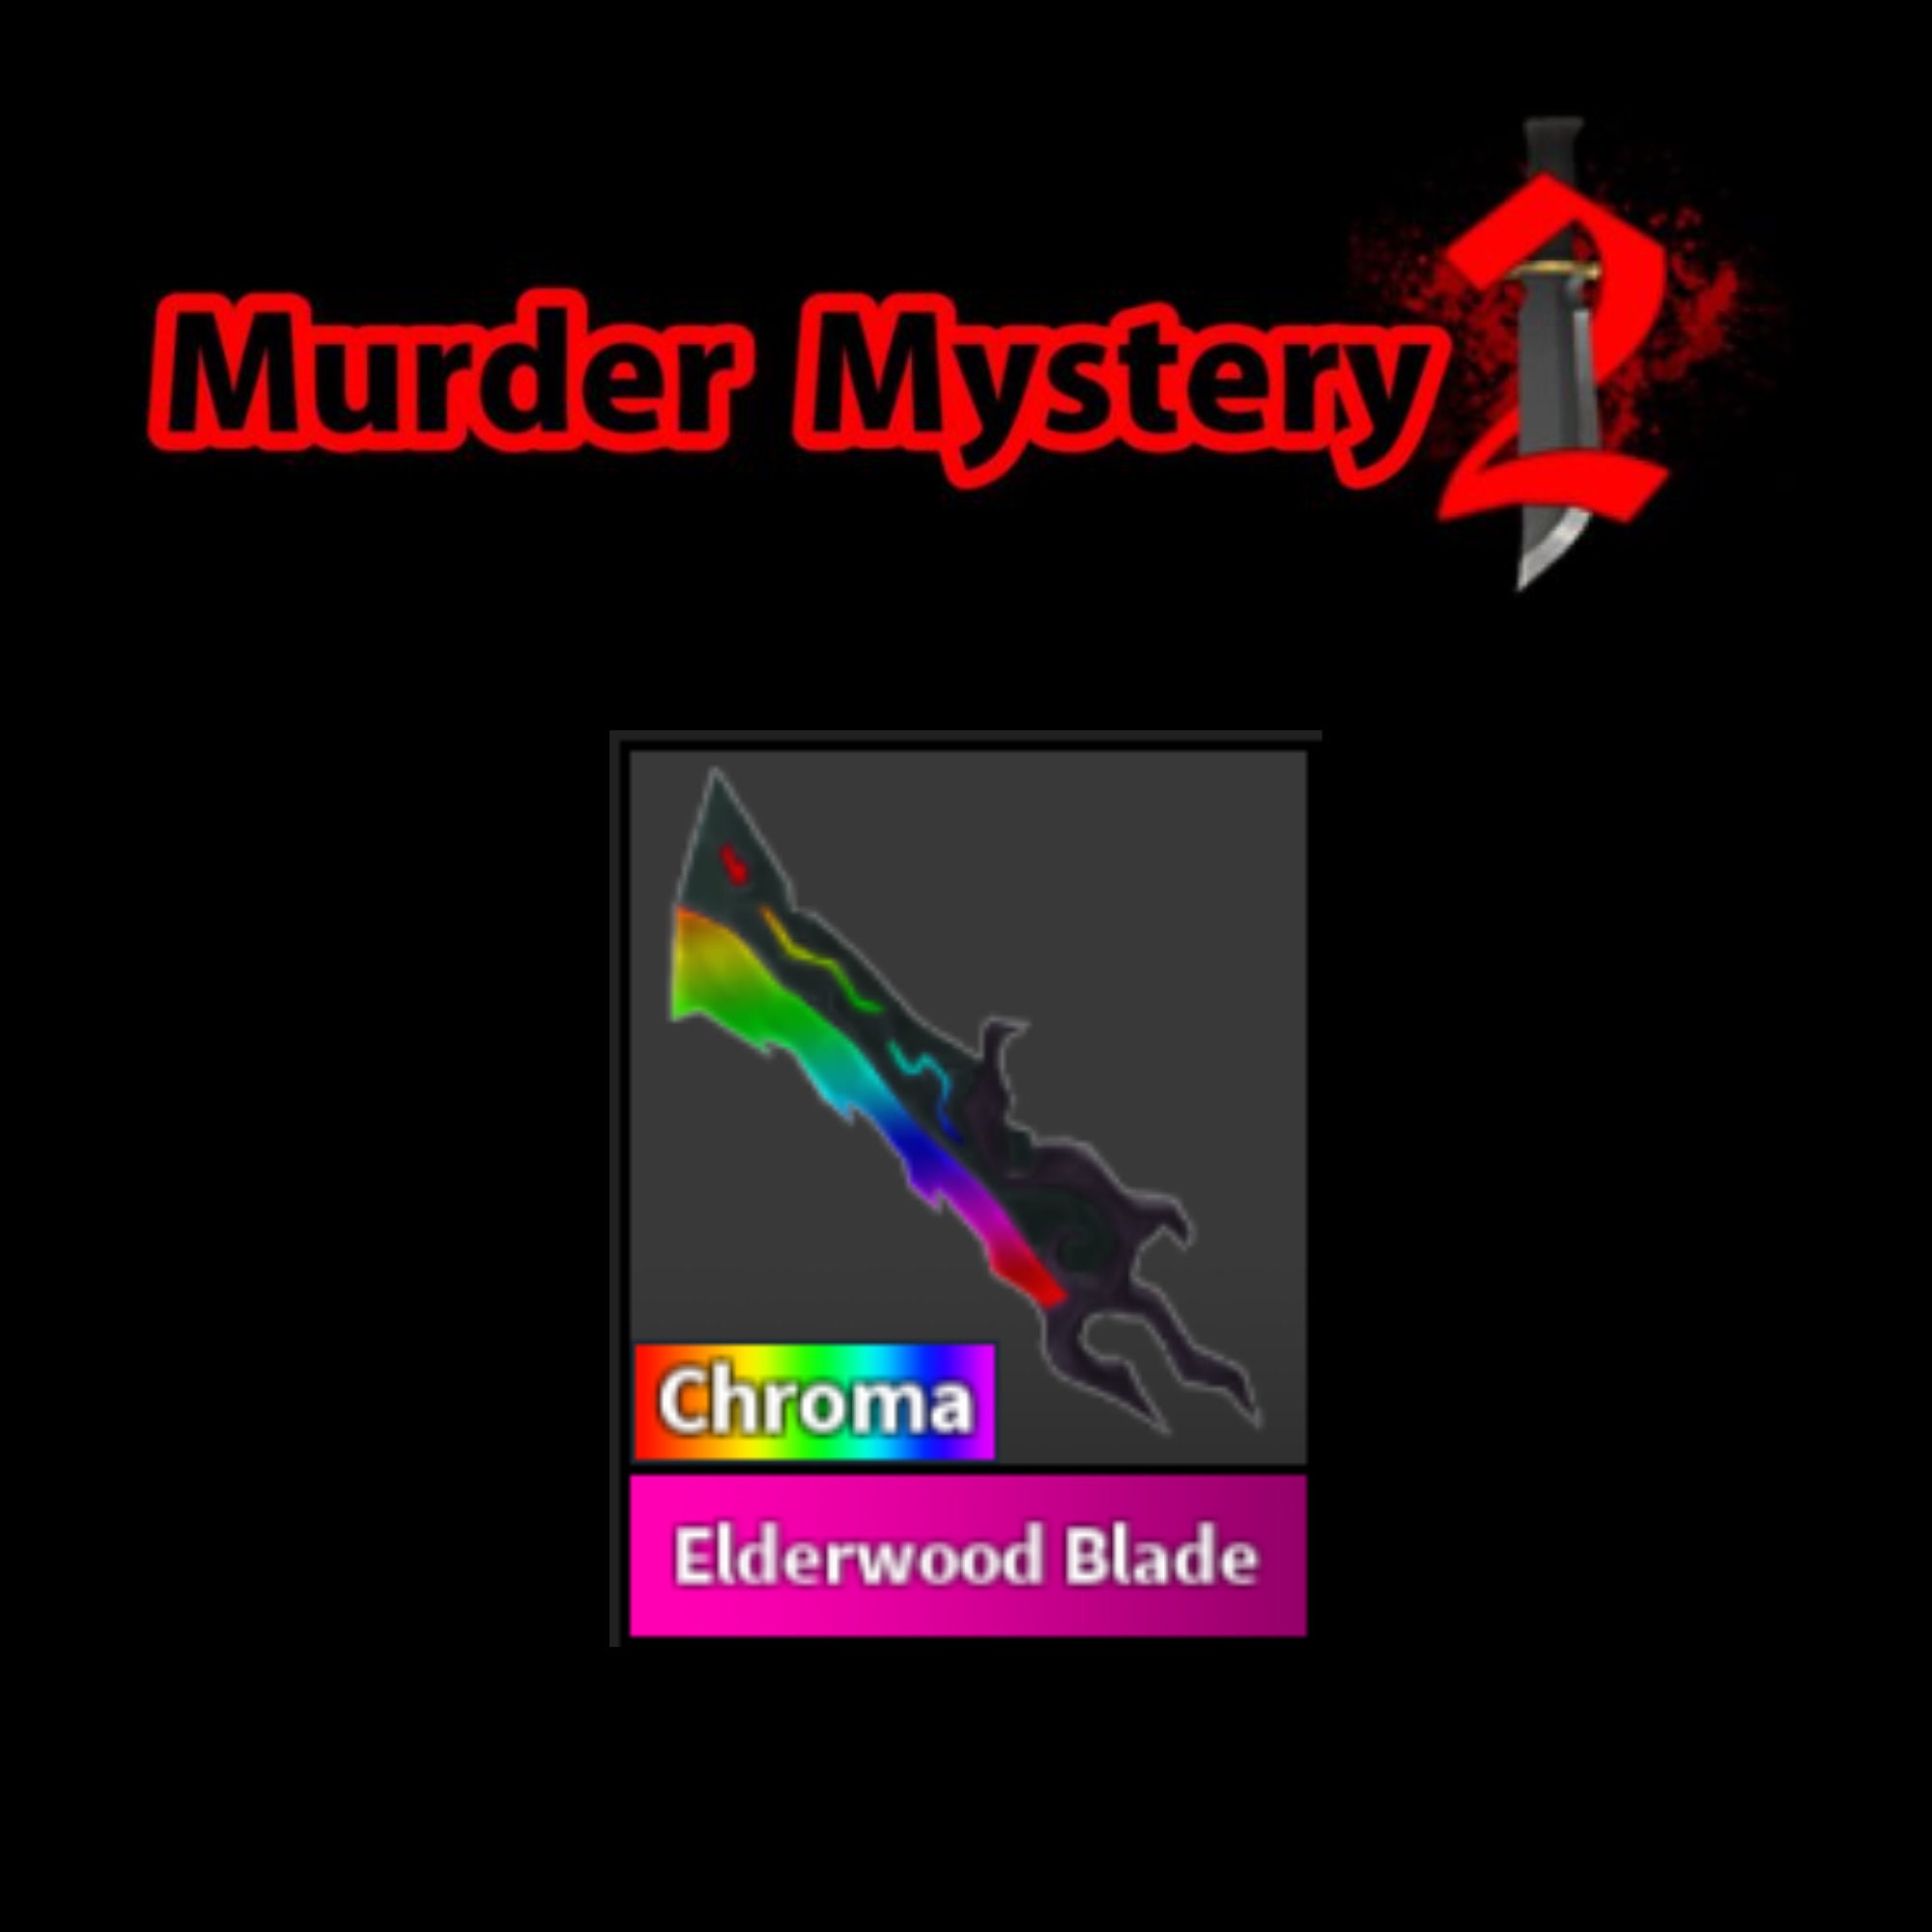 Full Elderwood Set, Trade Roblox Murder Mystery 2 (MM2) Items